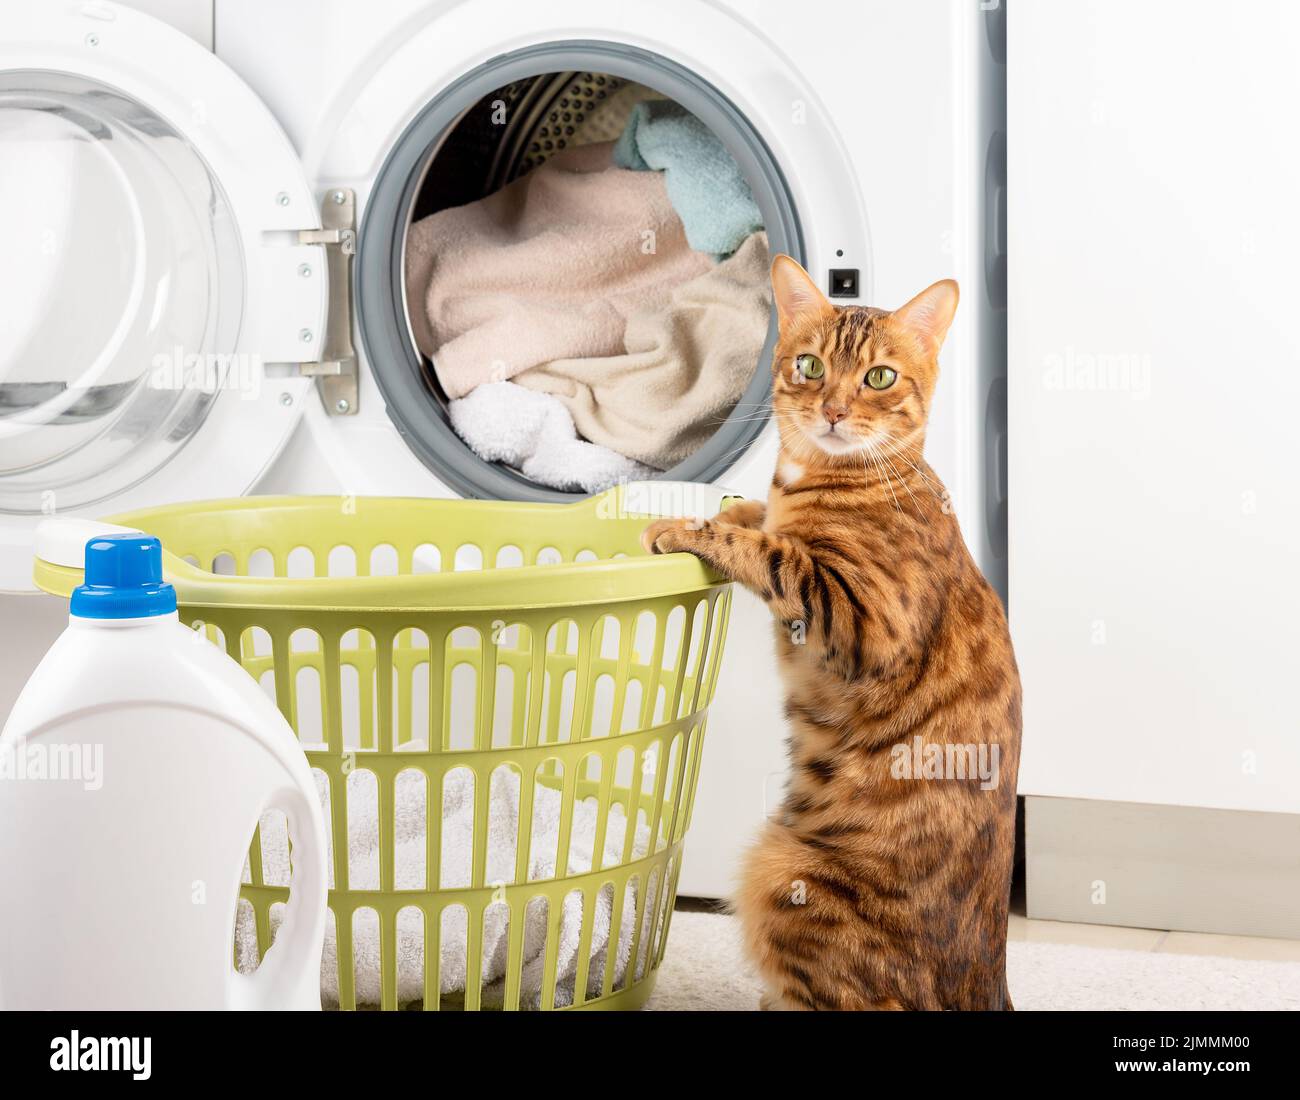 Funny cat washing dirty linen in the washing machine. Stock Photo